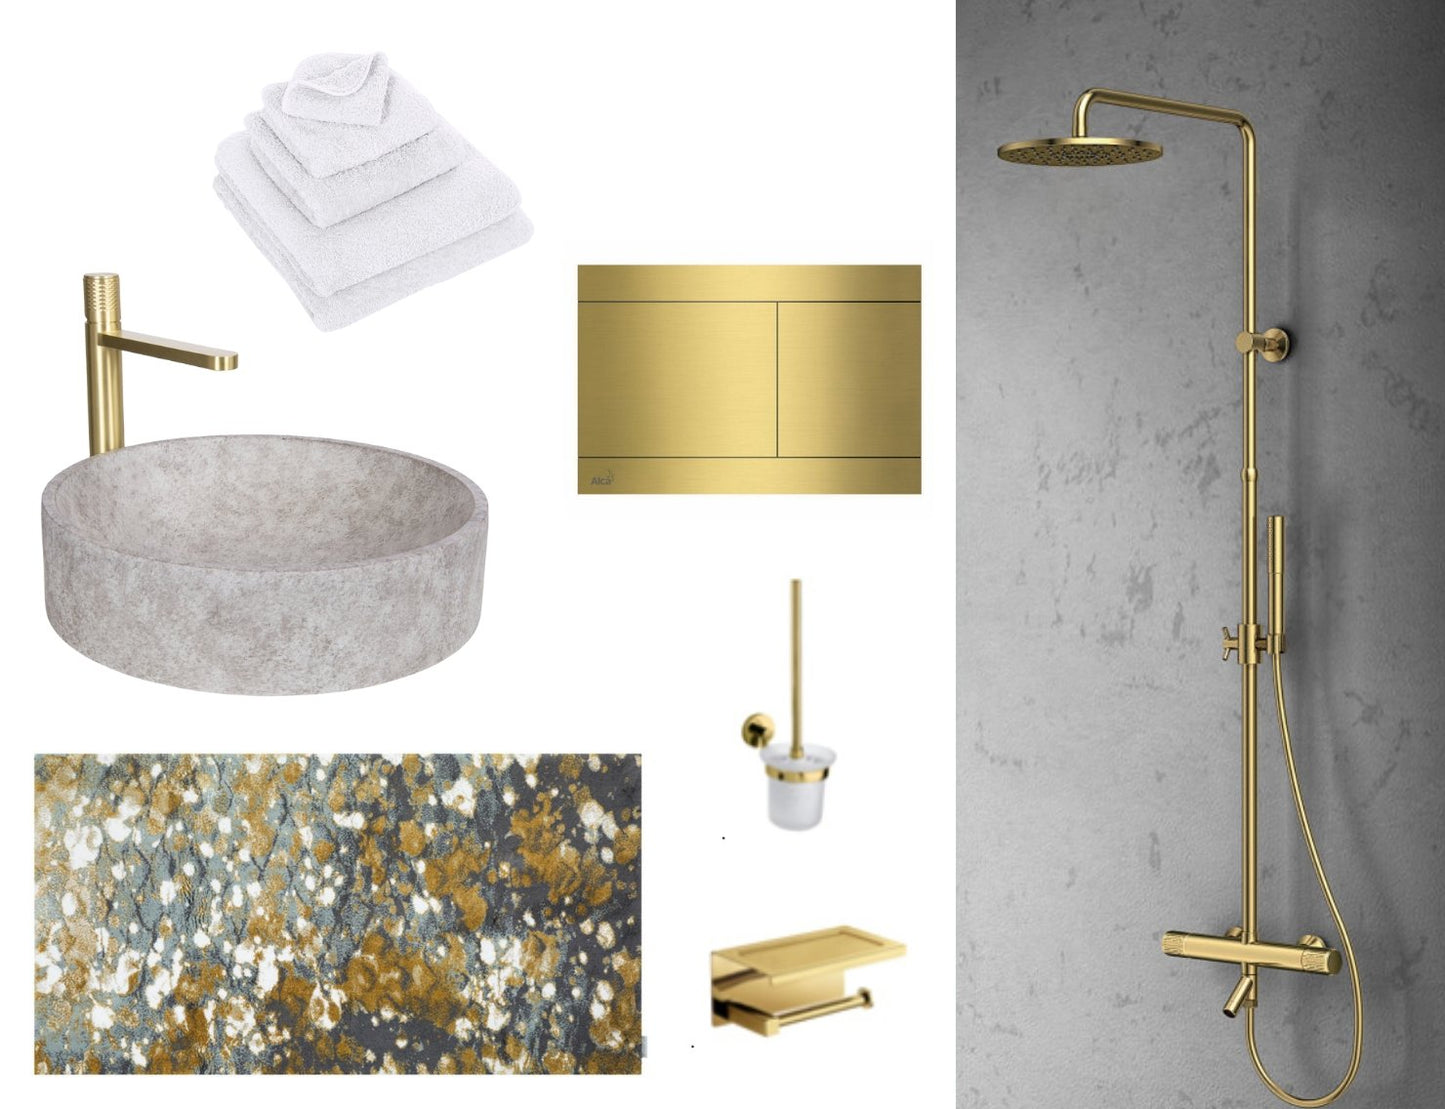 Satin Gold Toilet Paper Holder - |VESIMI Design| Luxury and Rustic bathrooms online